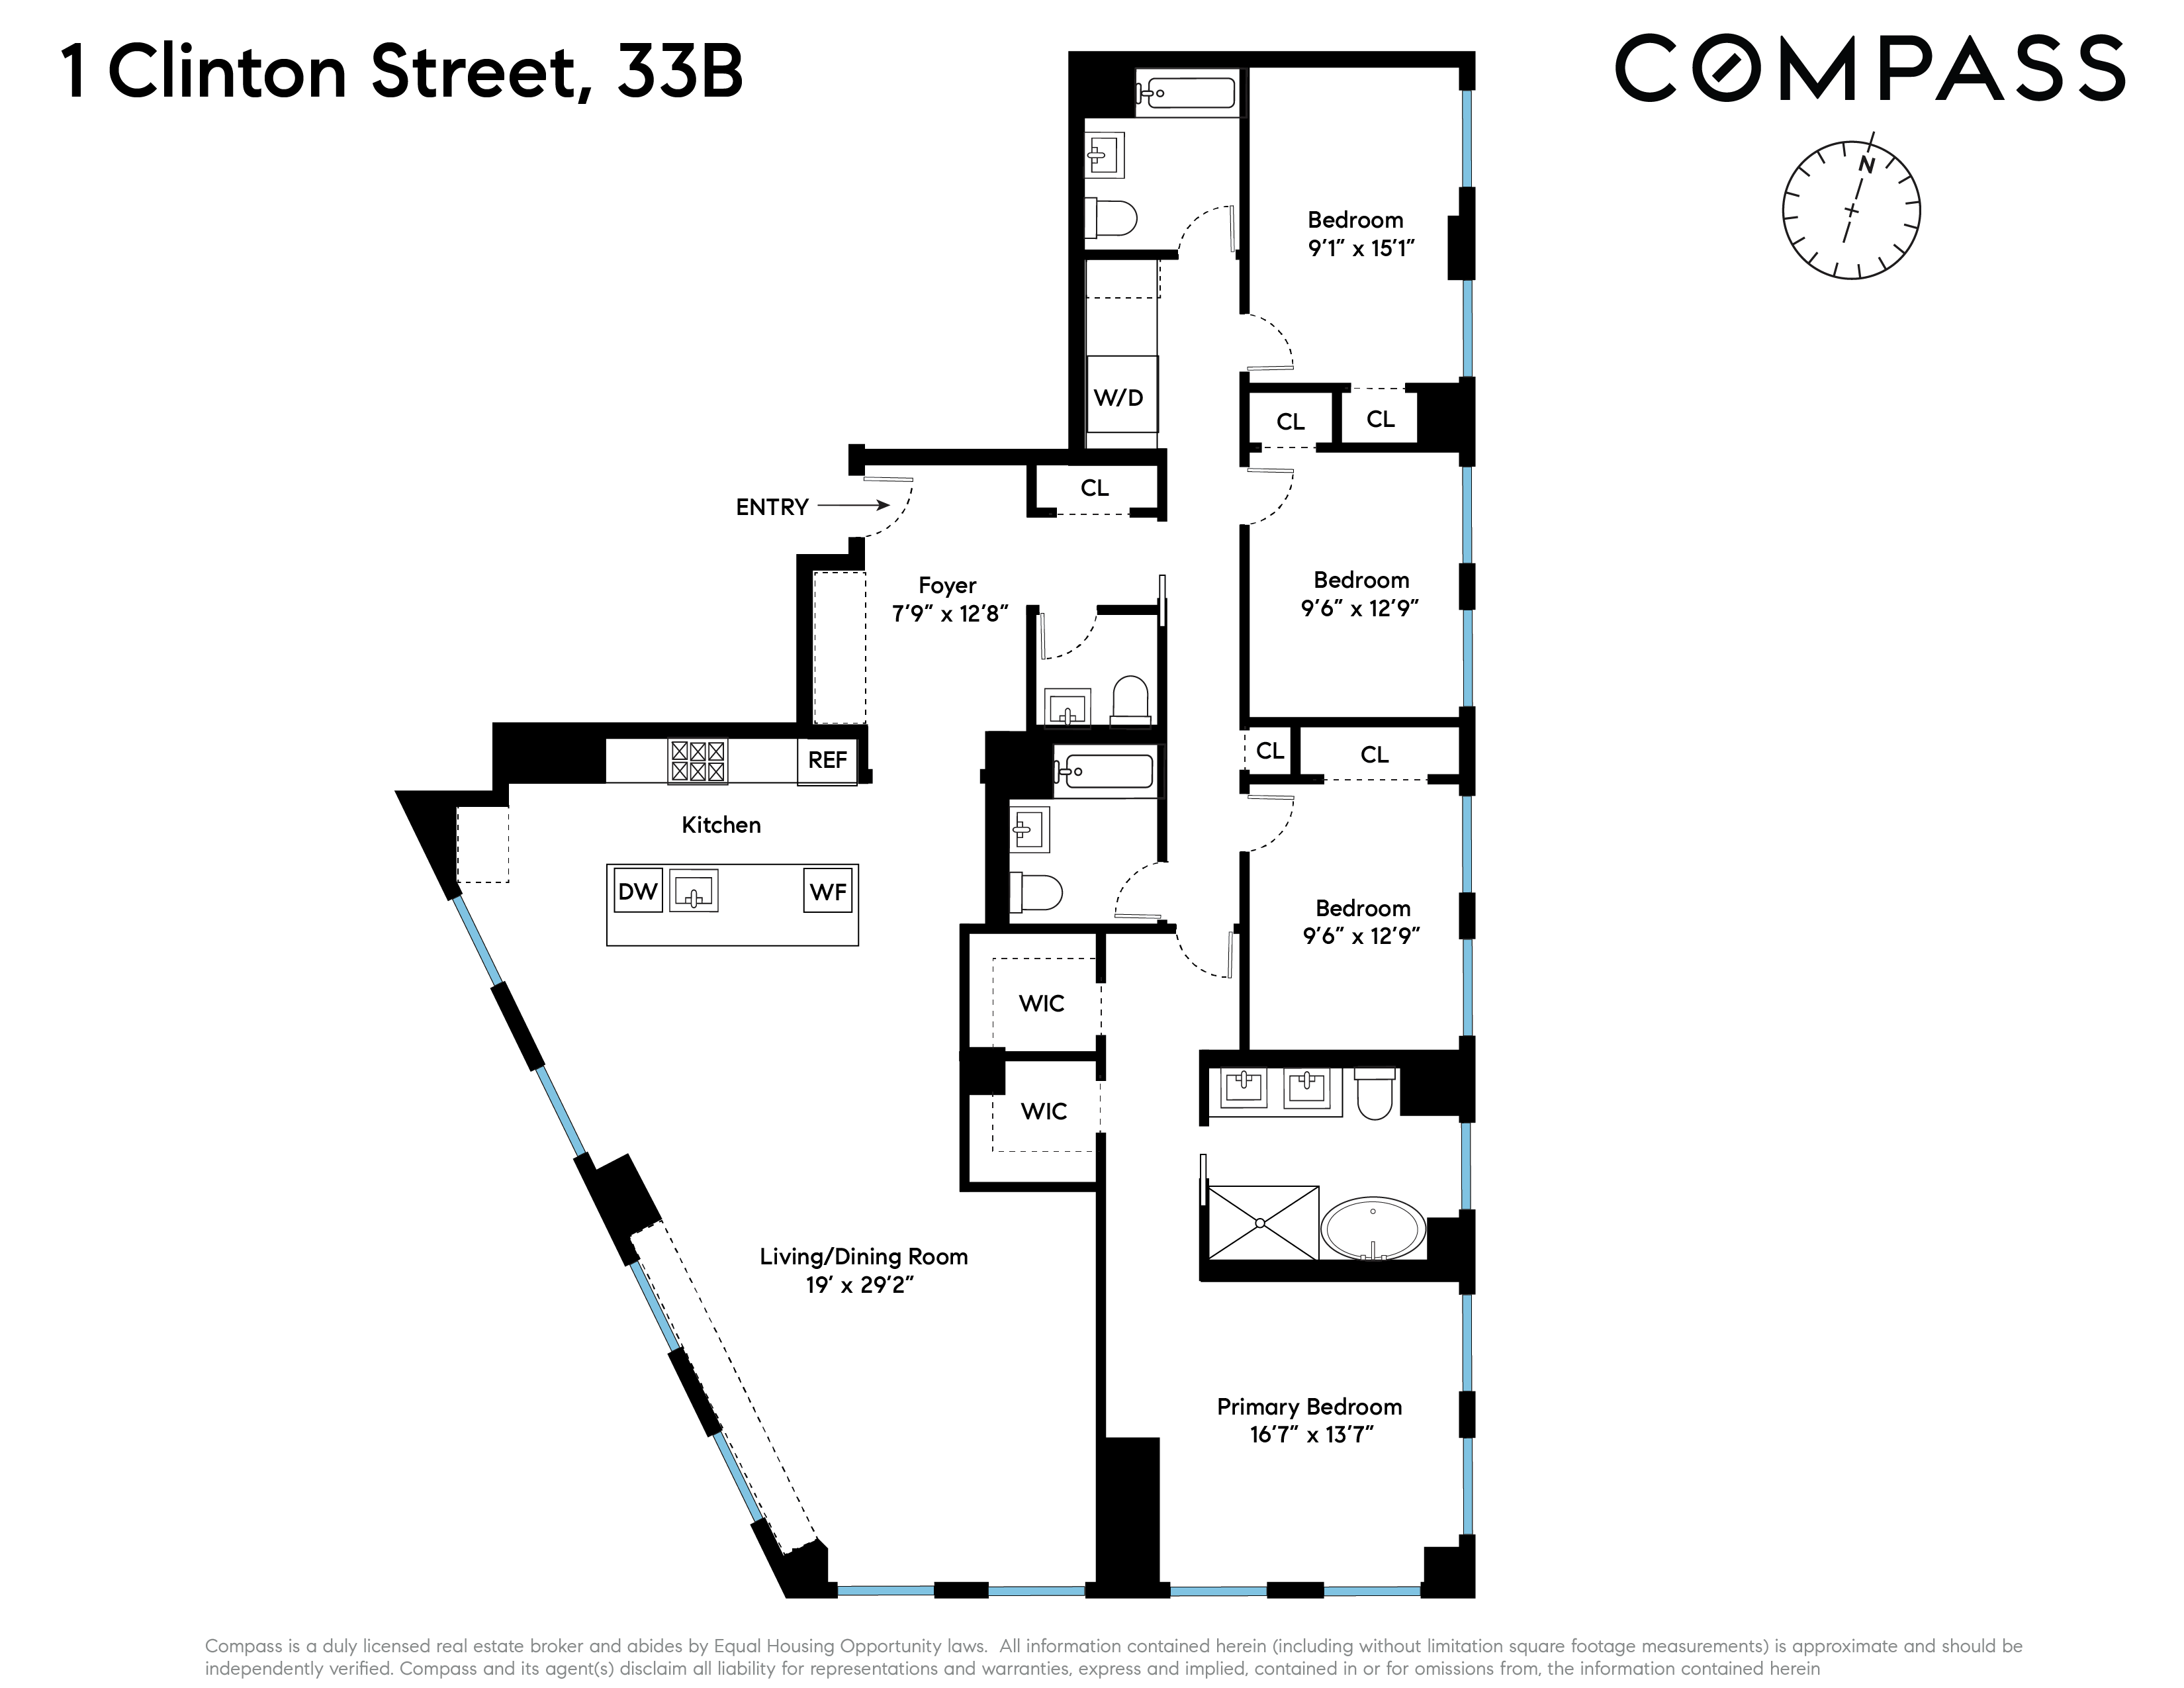 Floorplan for 1 Clinton Street, 33B